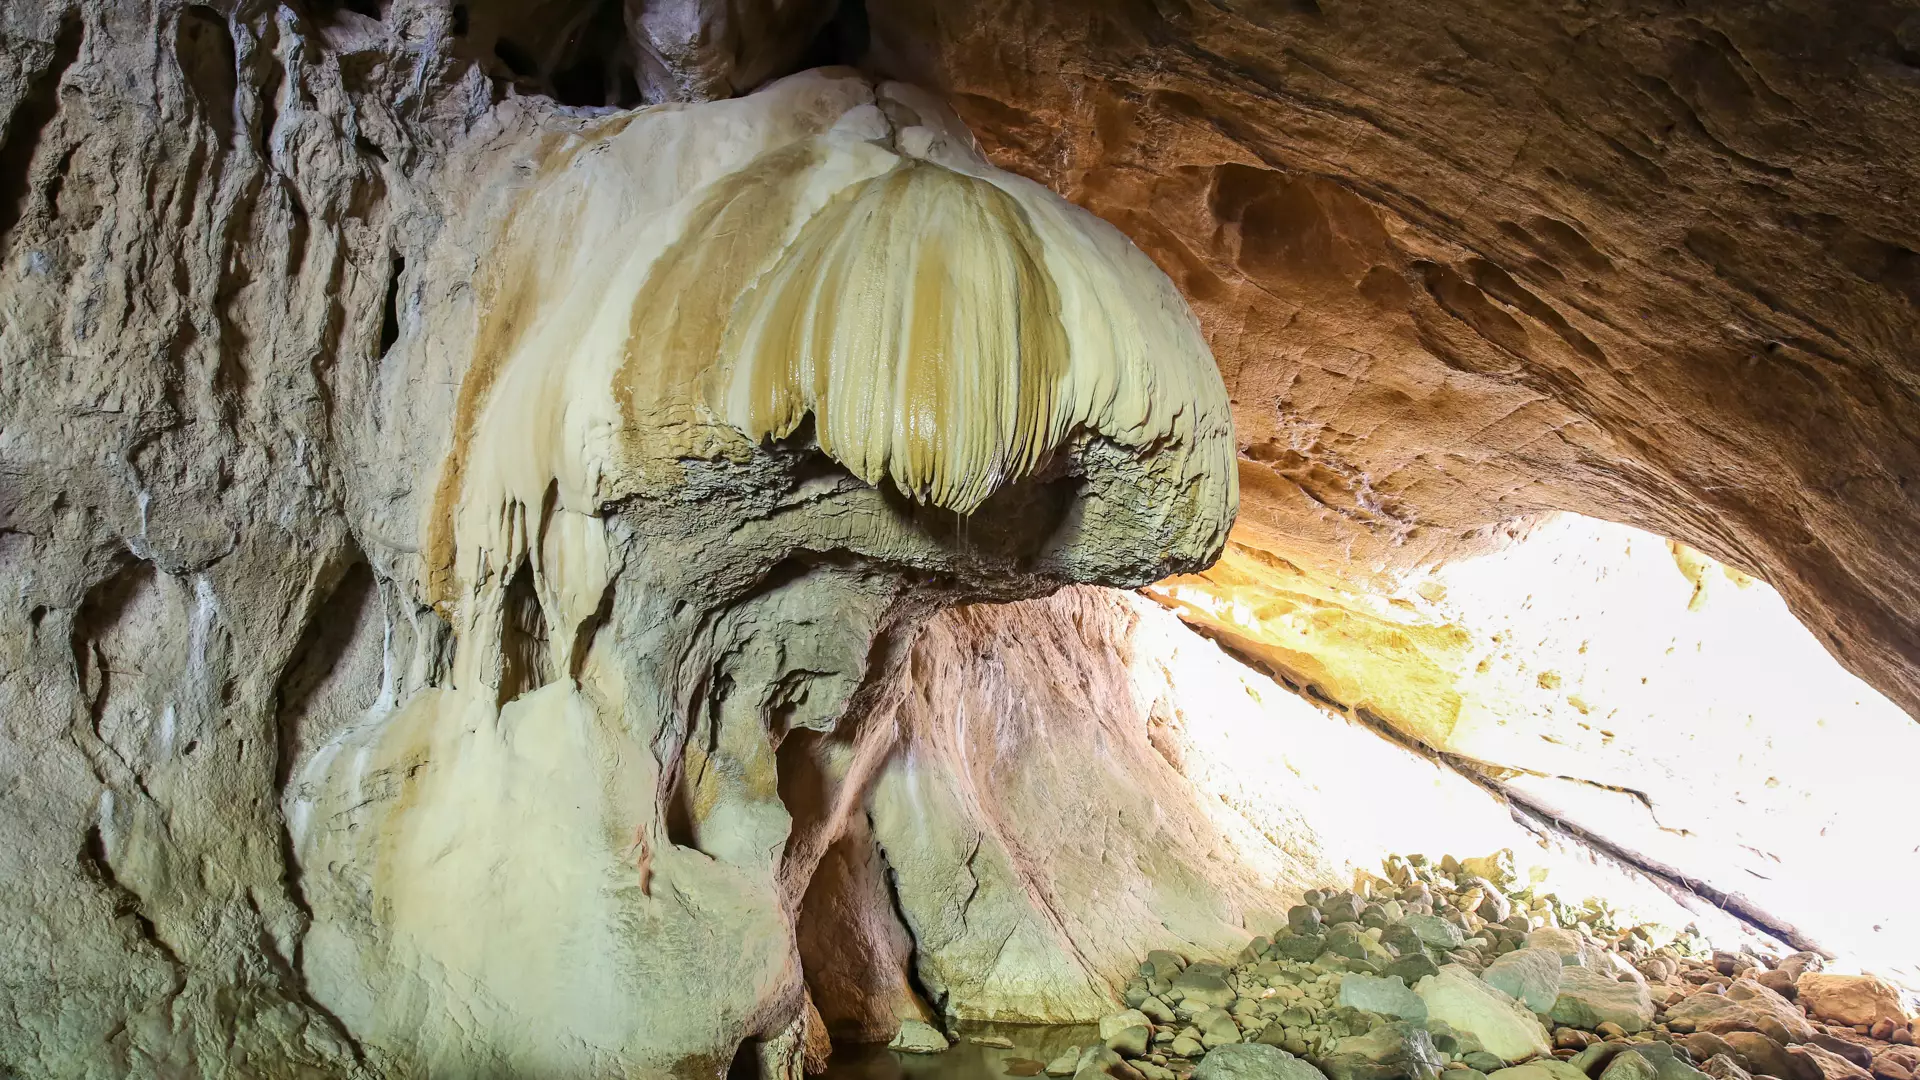 Tsutskhvati Cave - A protected area in Tkibuli Municipality